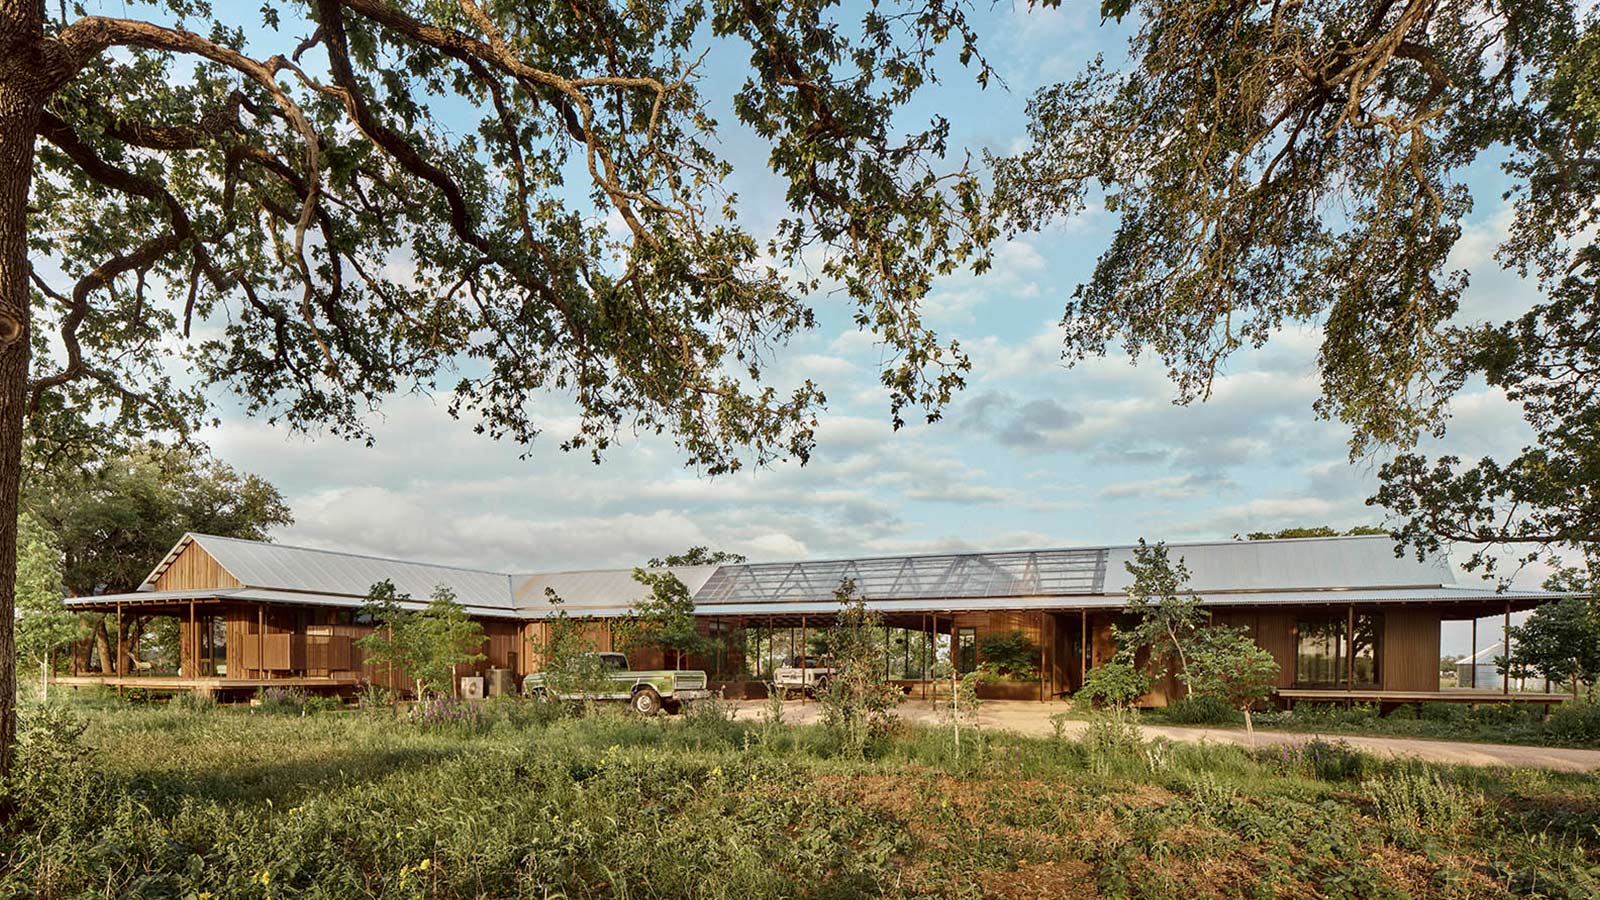 Roam Ranch by Baldridge Architects